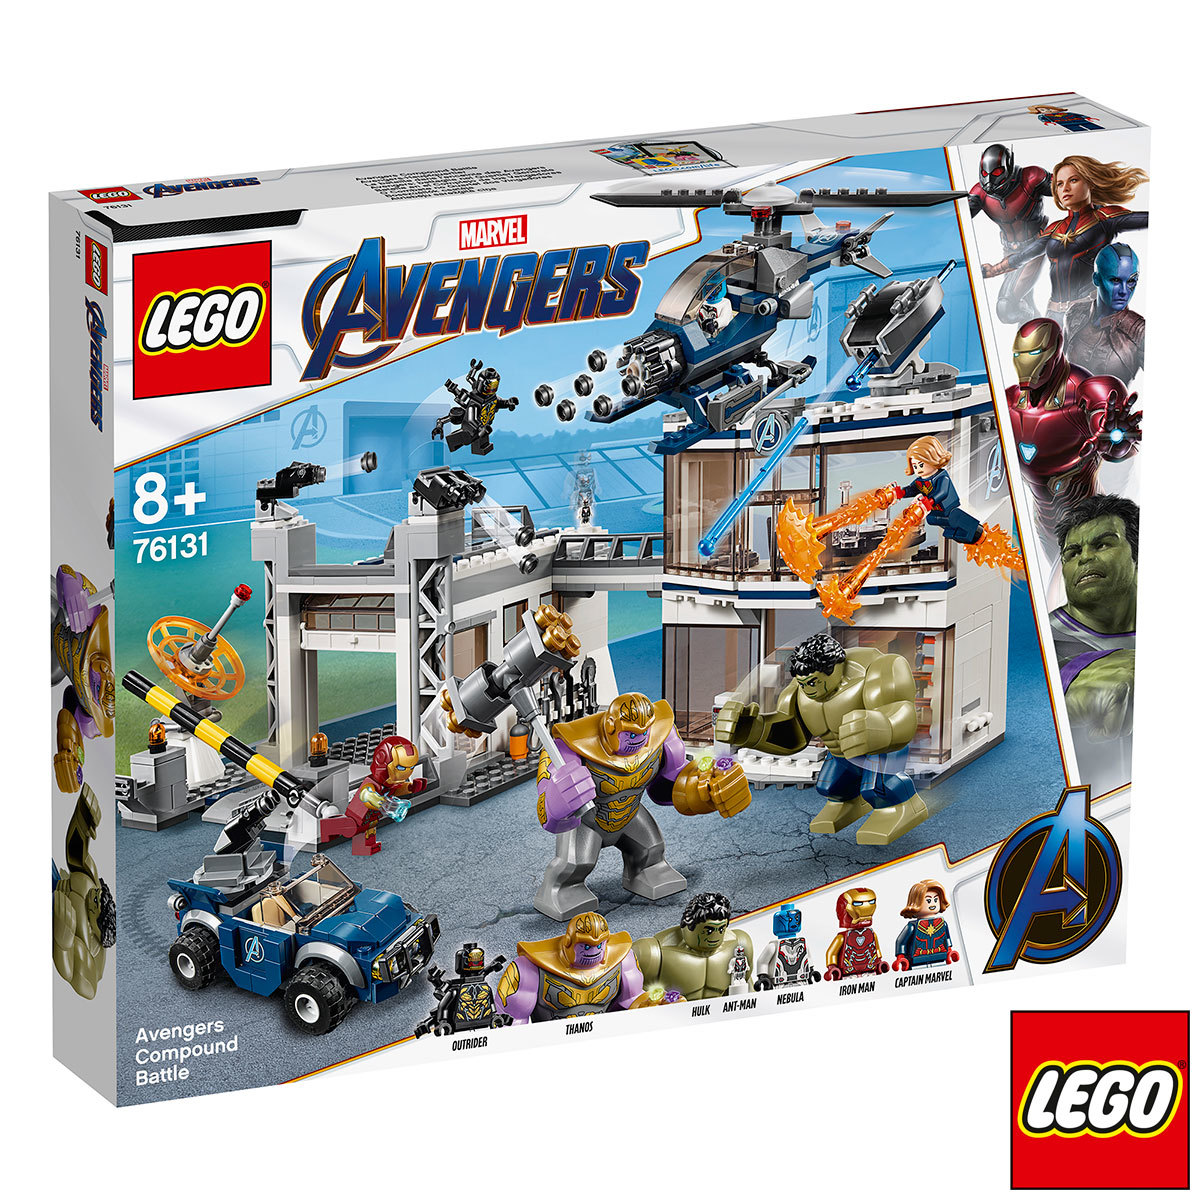 Lego Avengers compound battle box image front